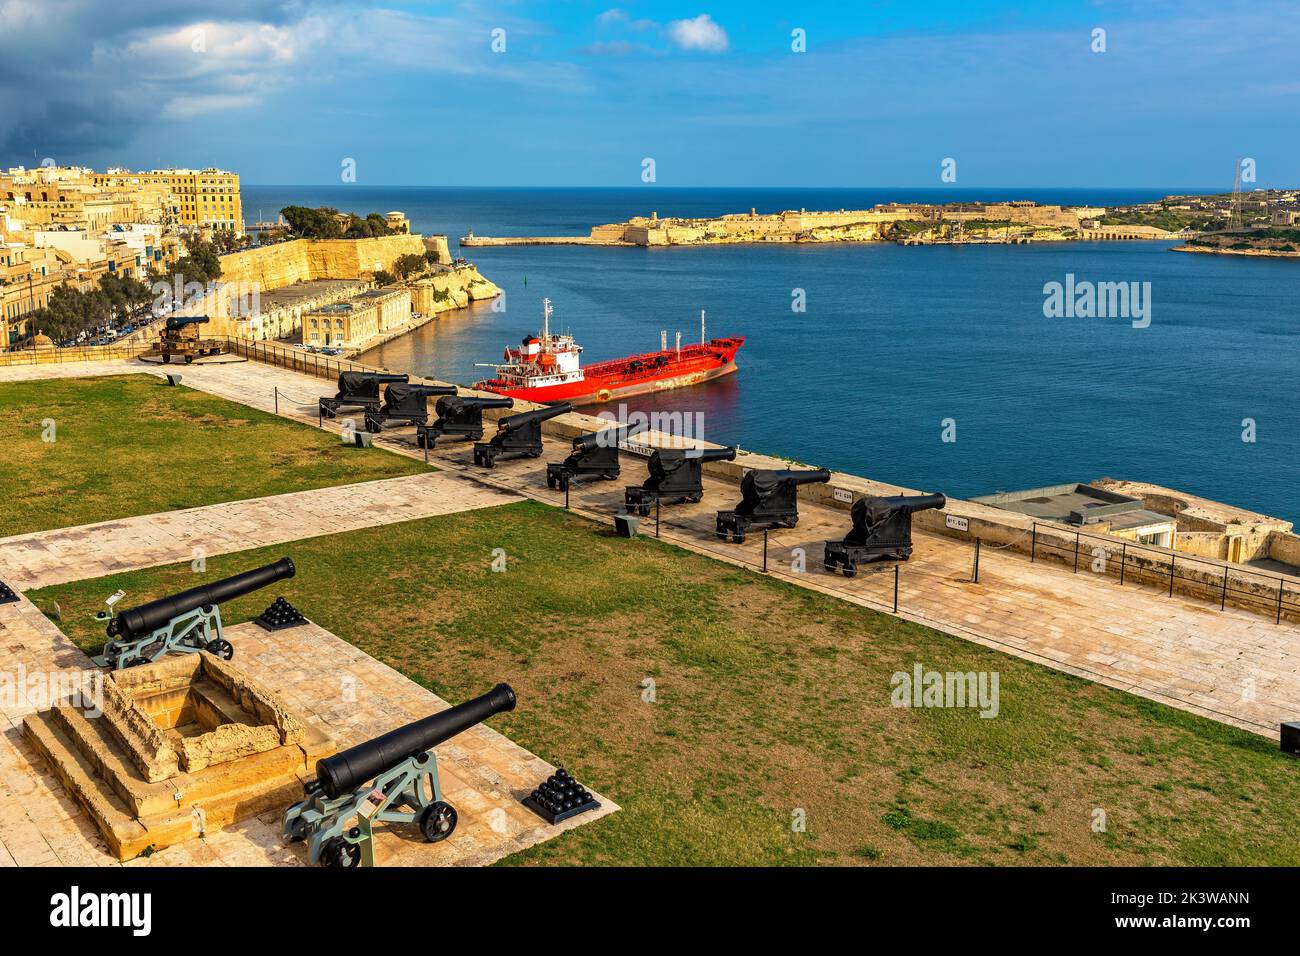 Old artillery battery on the bastion overlooking Grand Harbour in Valletta, Malta. Stock Photo